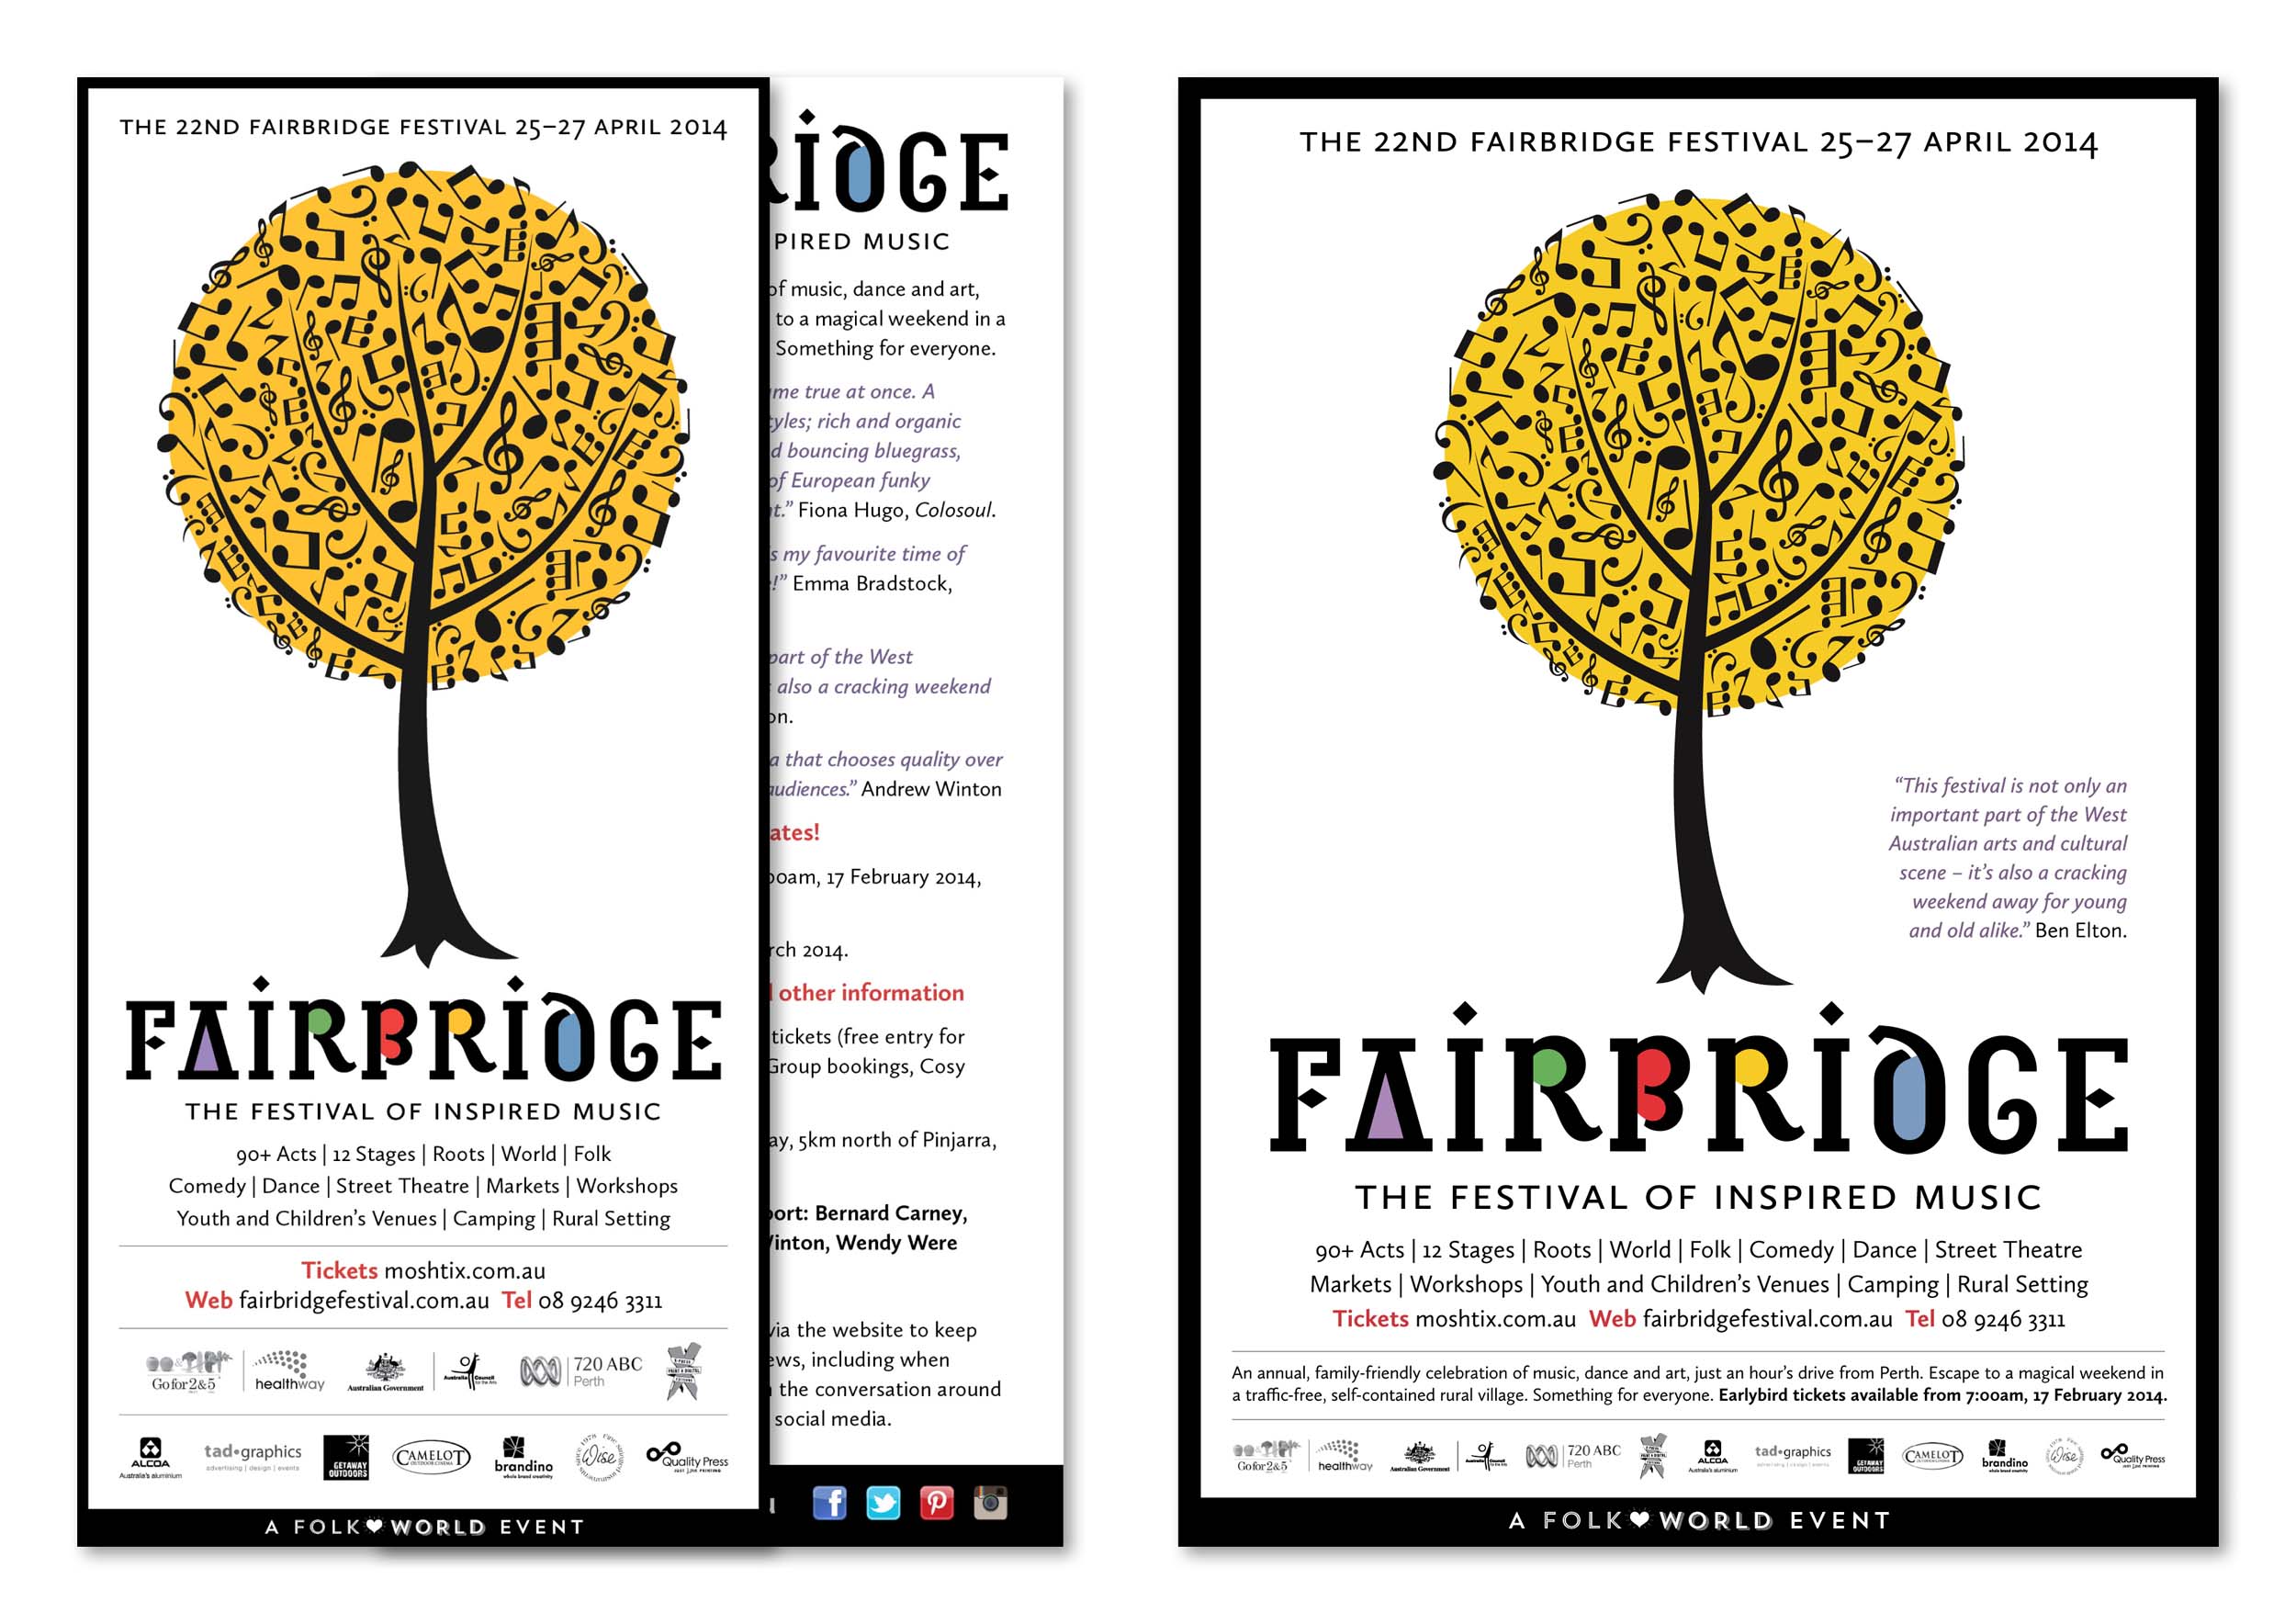 Fairbridge Brand and Theme.jpg